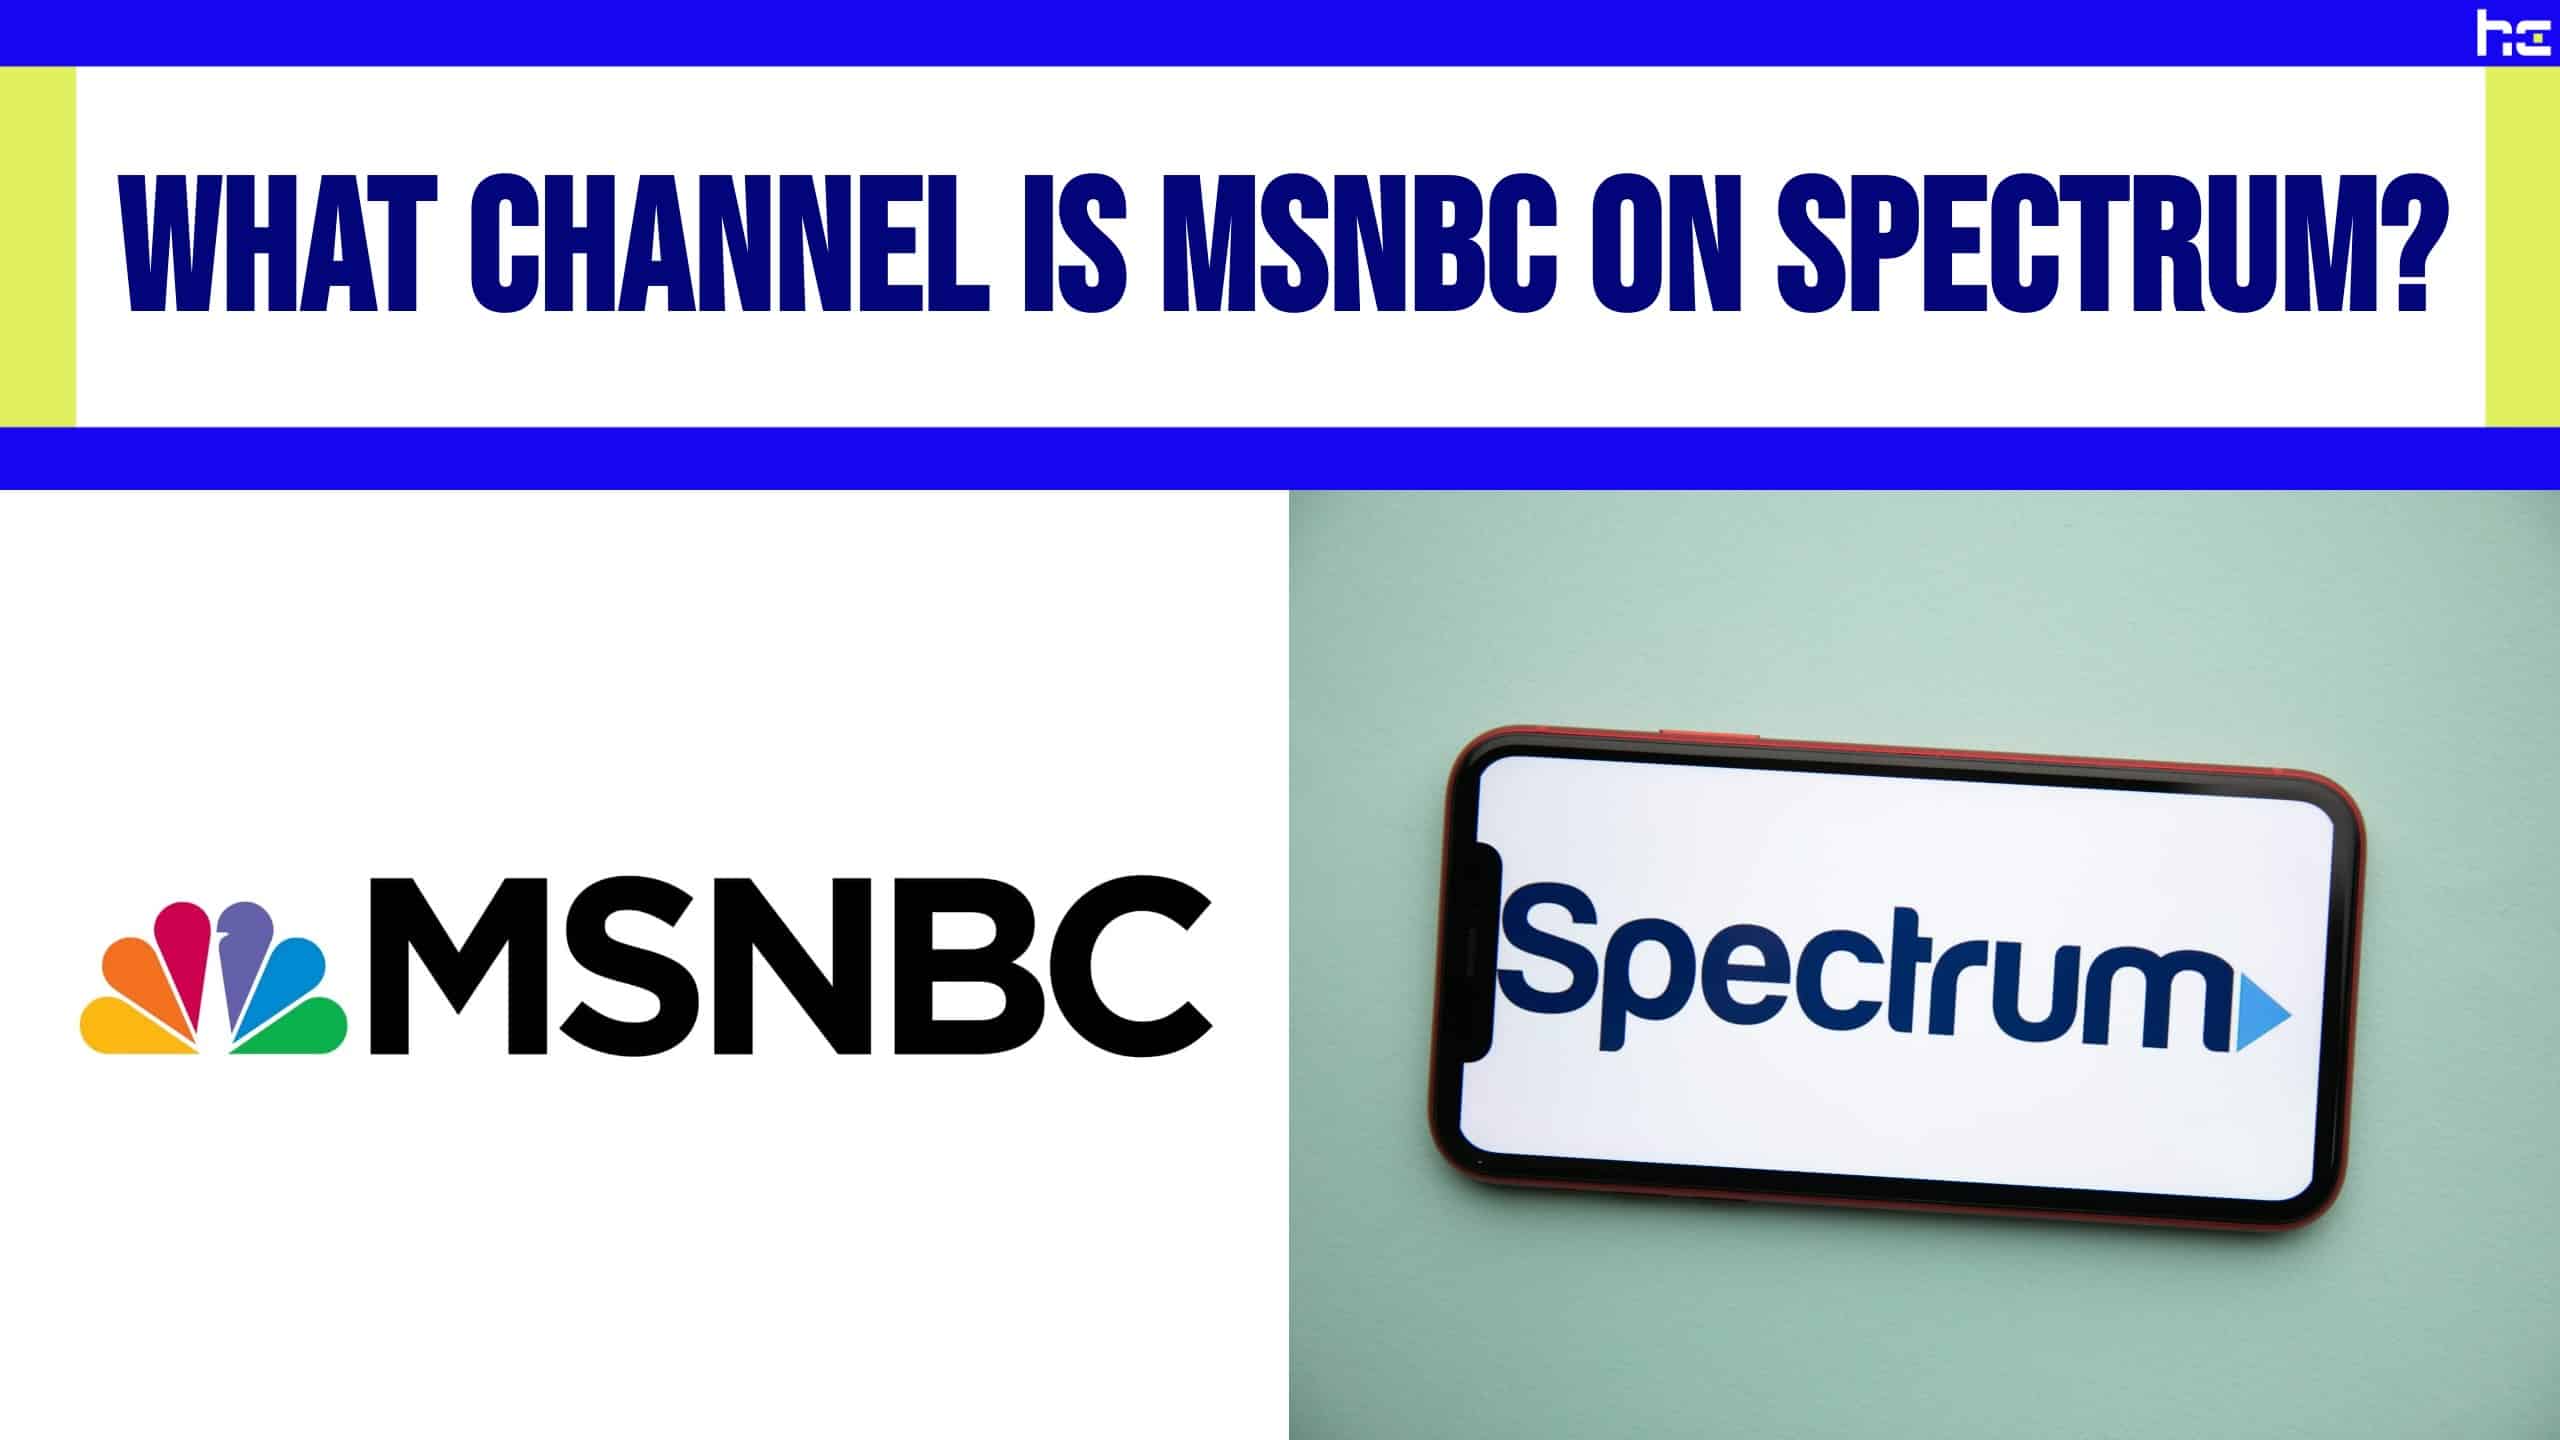 MSNBC on Spectrum